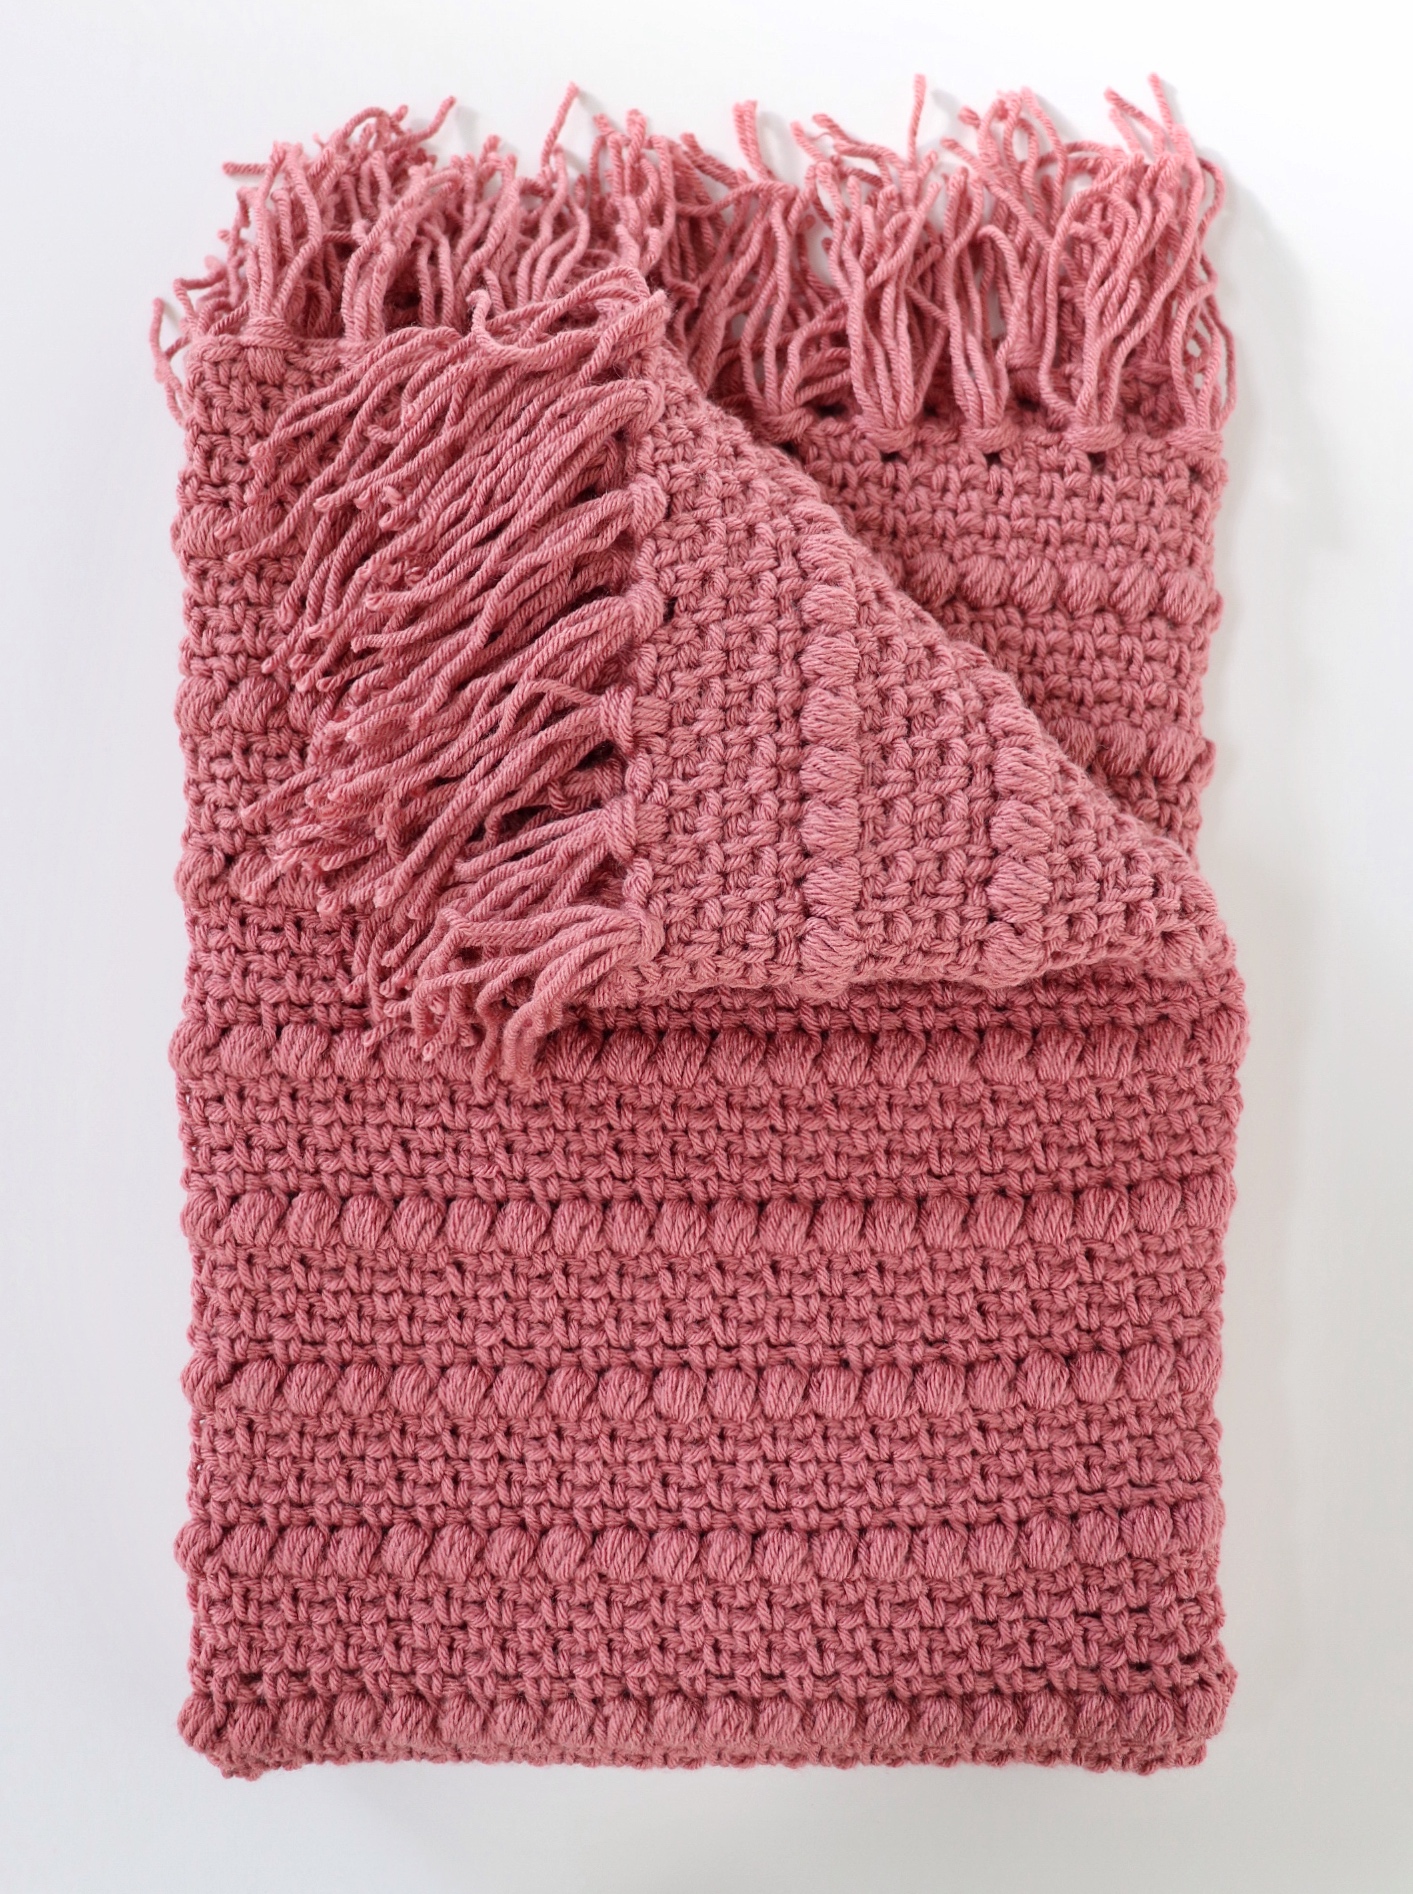 Crochet Boho Puff Stripes Blanket - Daisy Farm Crafts